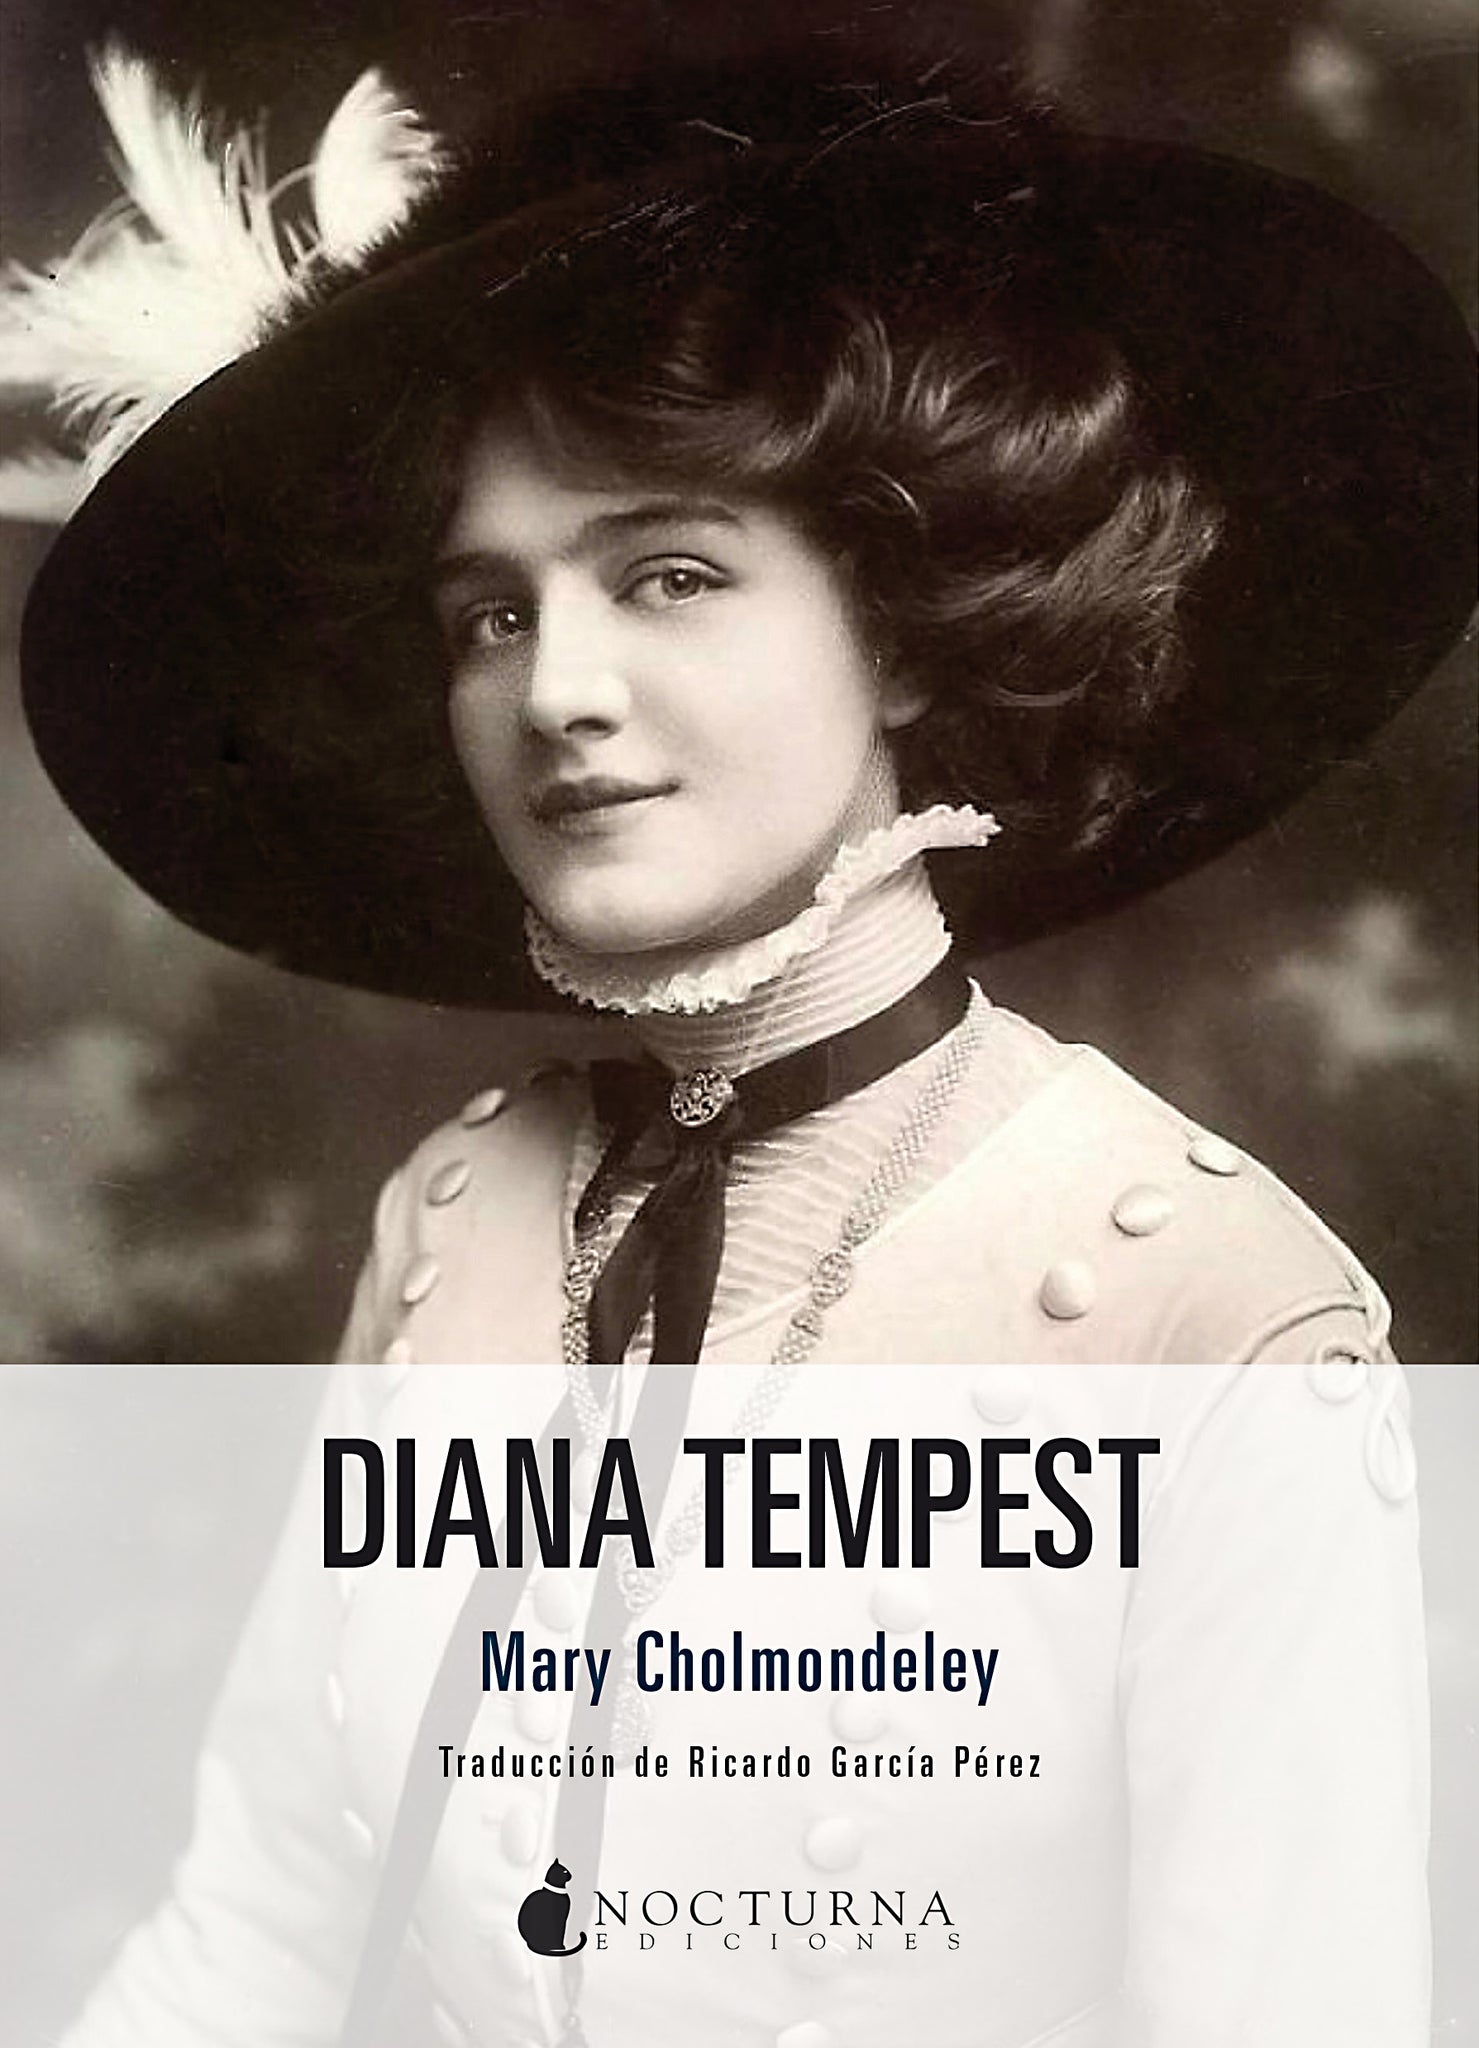 Diana Tempest (Mary Cholmondeley)